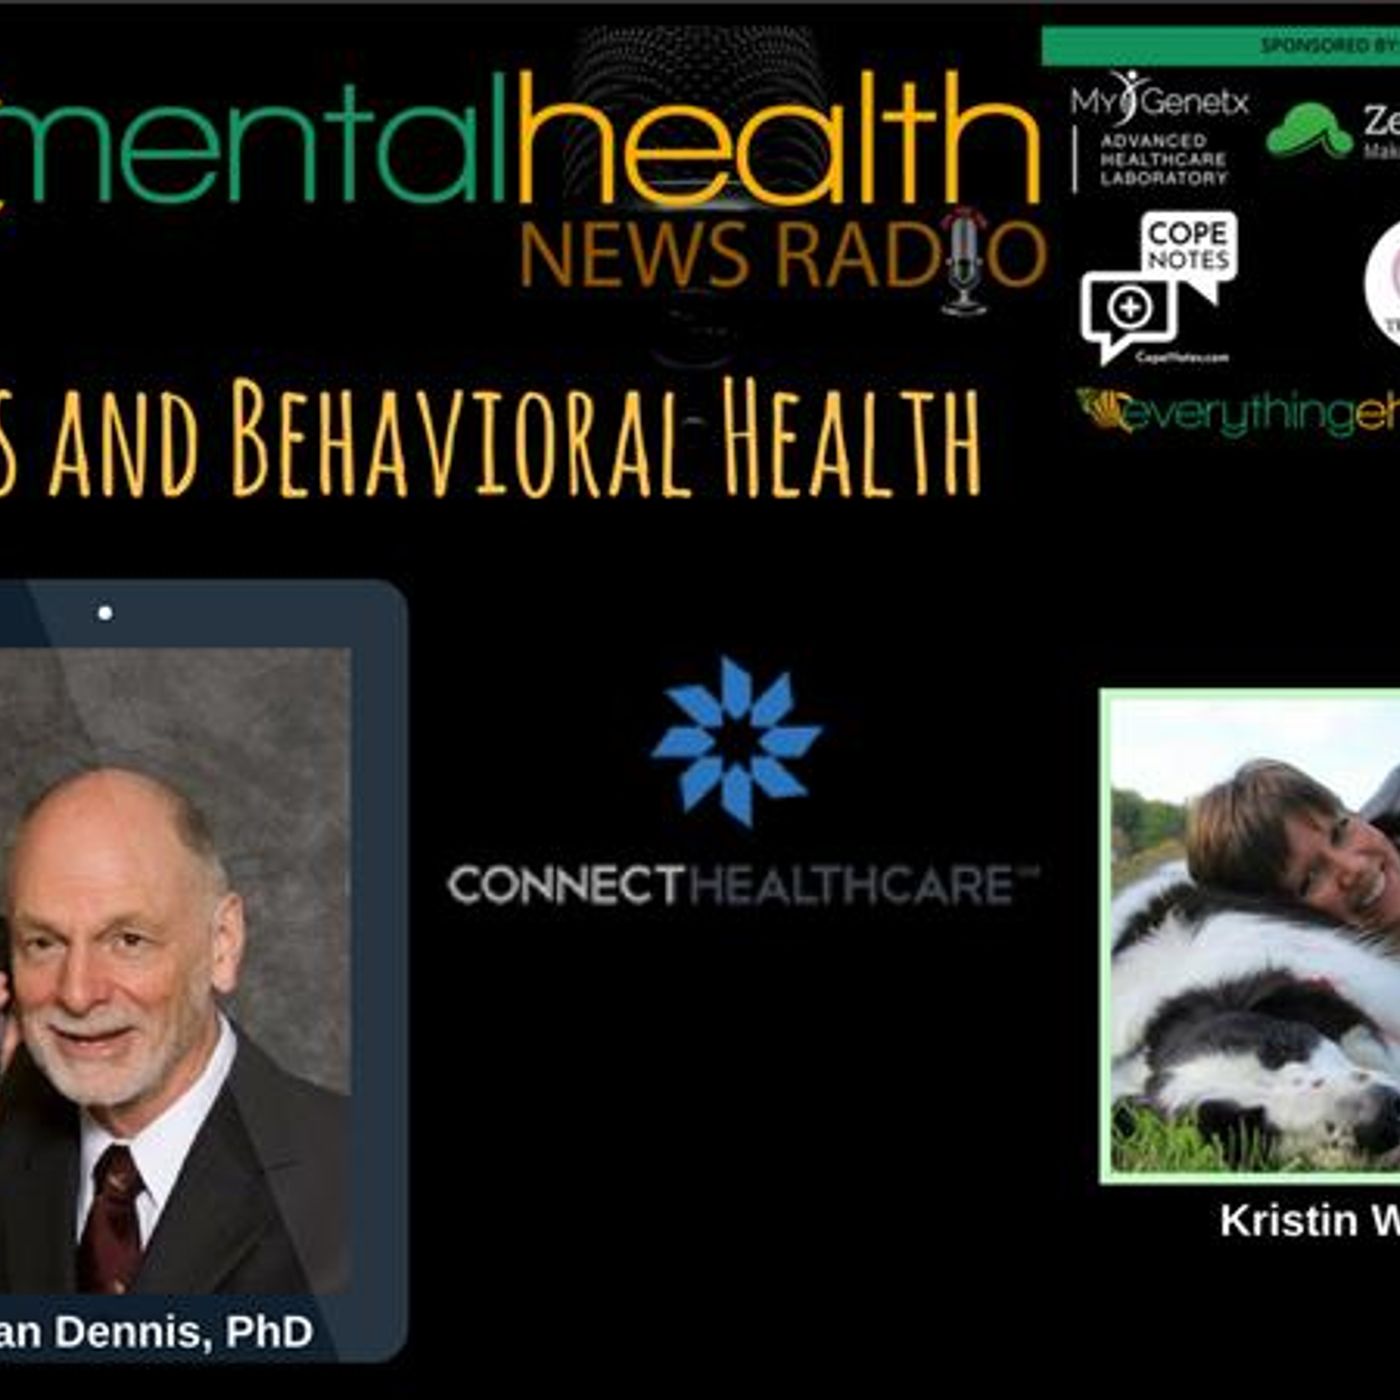 Mental Health News Radio - HIOs and Behavioral Health with Lyman Dennis, PhD